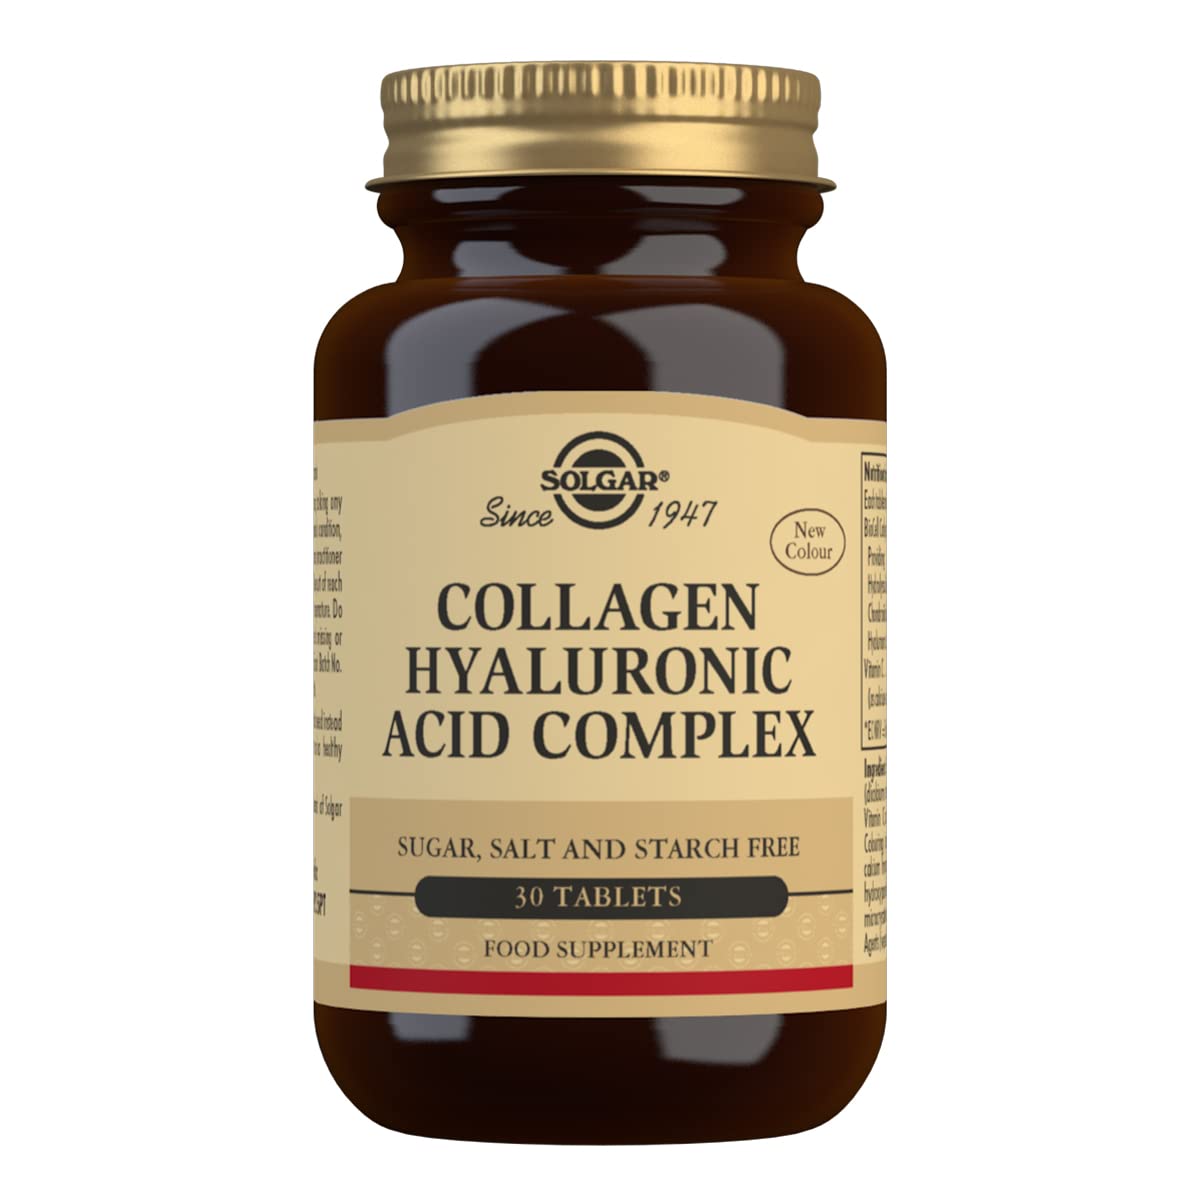 Solgar Collagen Hyaluronic Acid Complex - Reduces Fine Lines & Wrinkles - Skin Hydration - Vitamin C - 30 Tablets